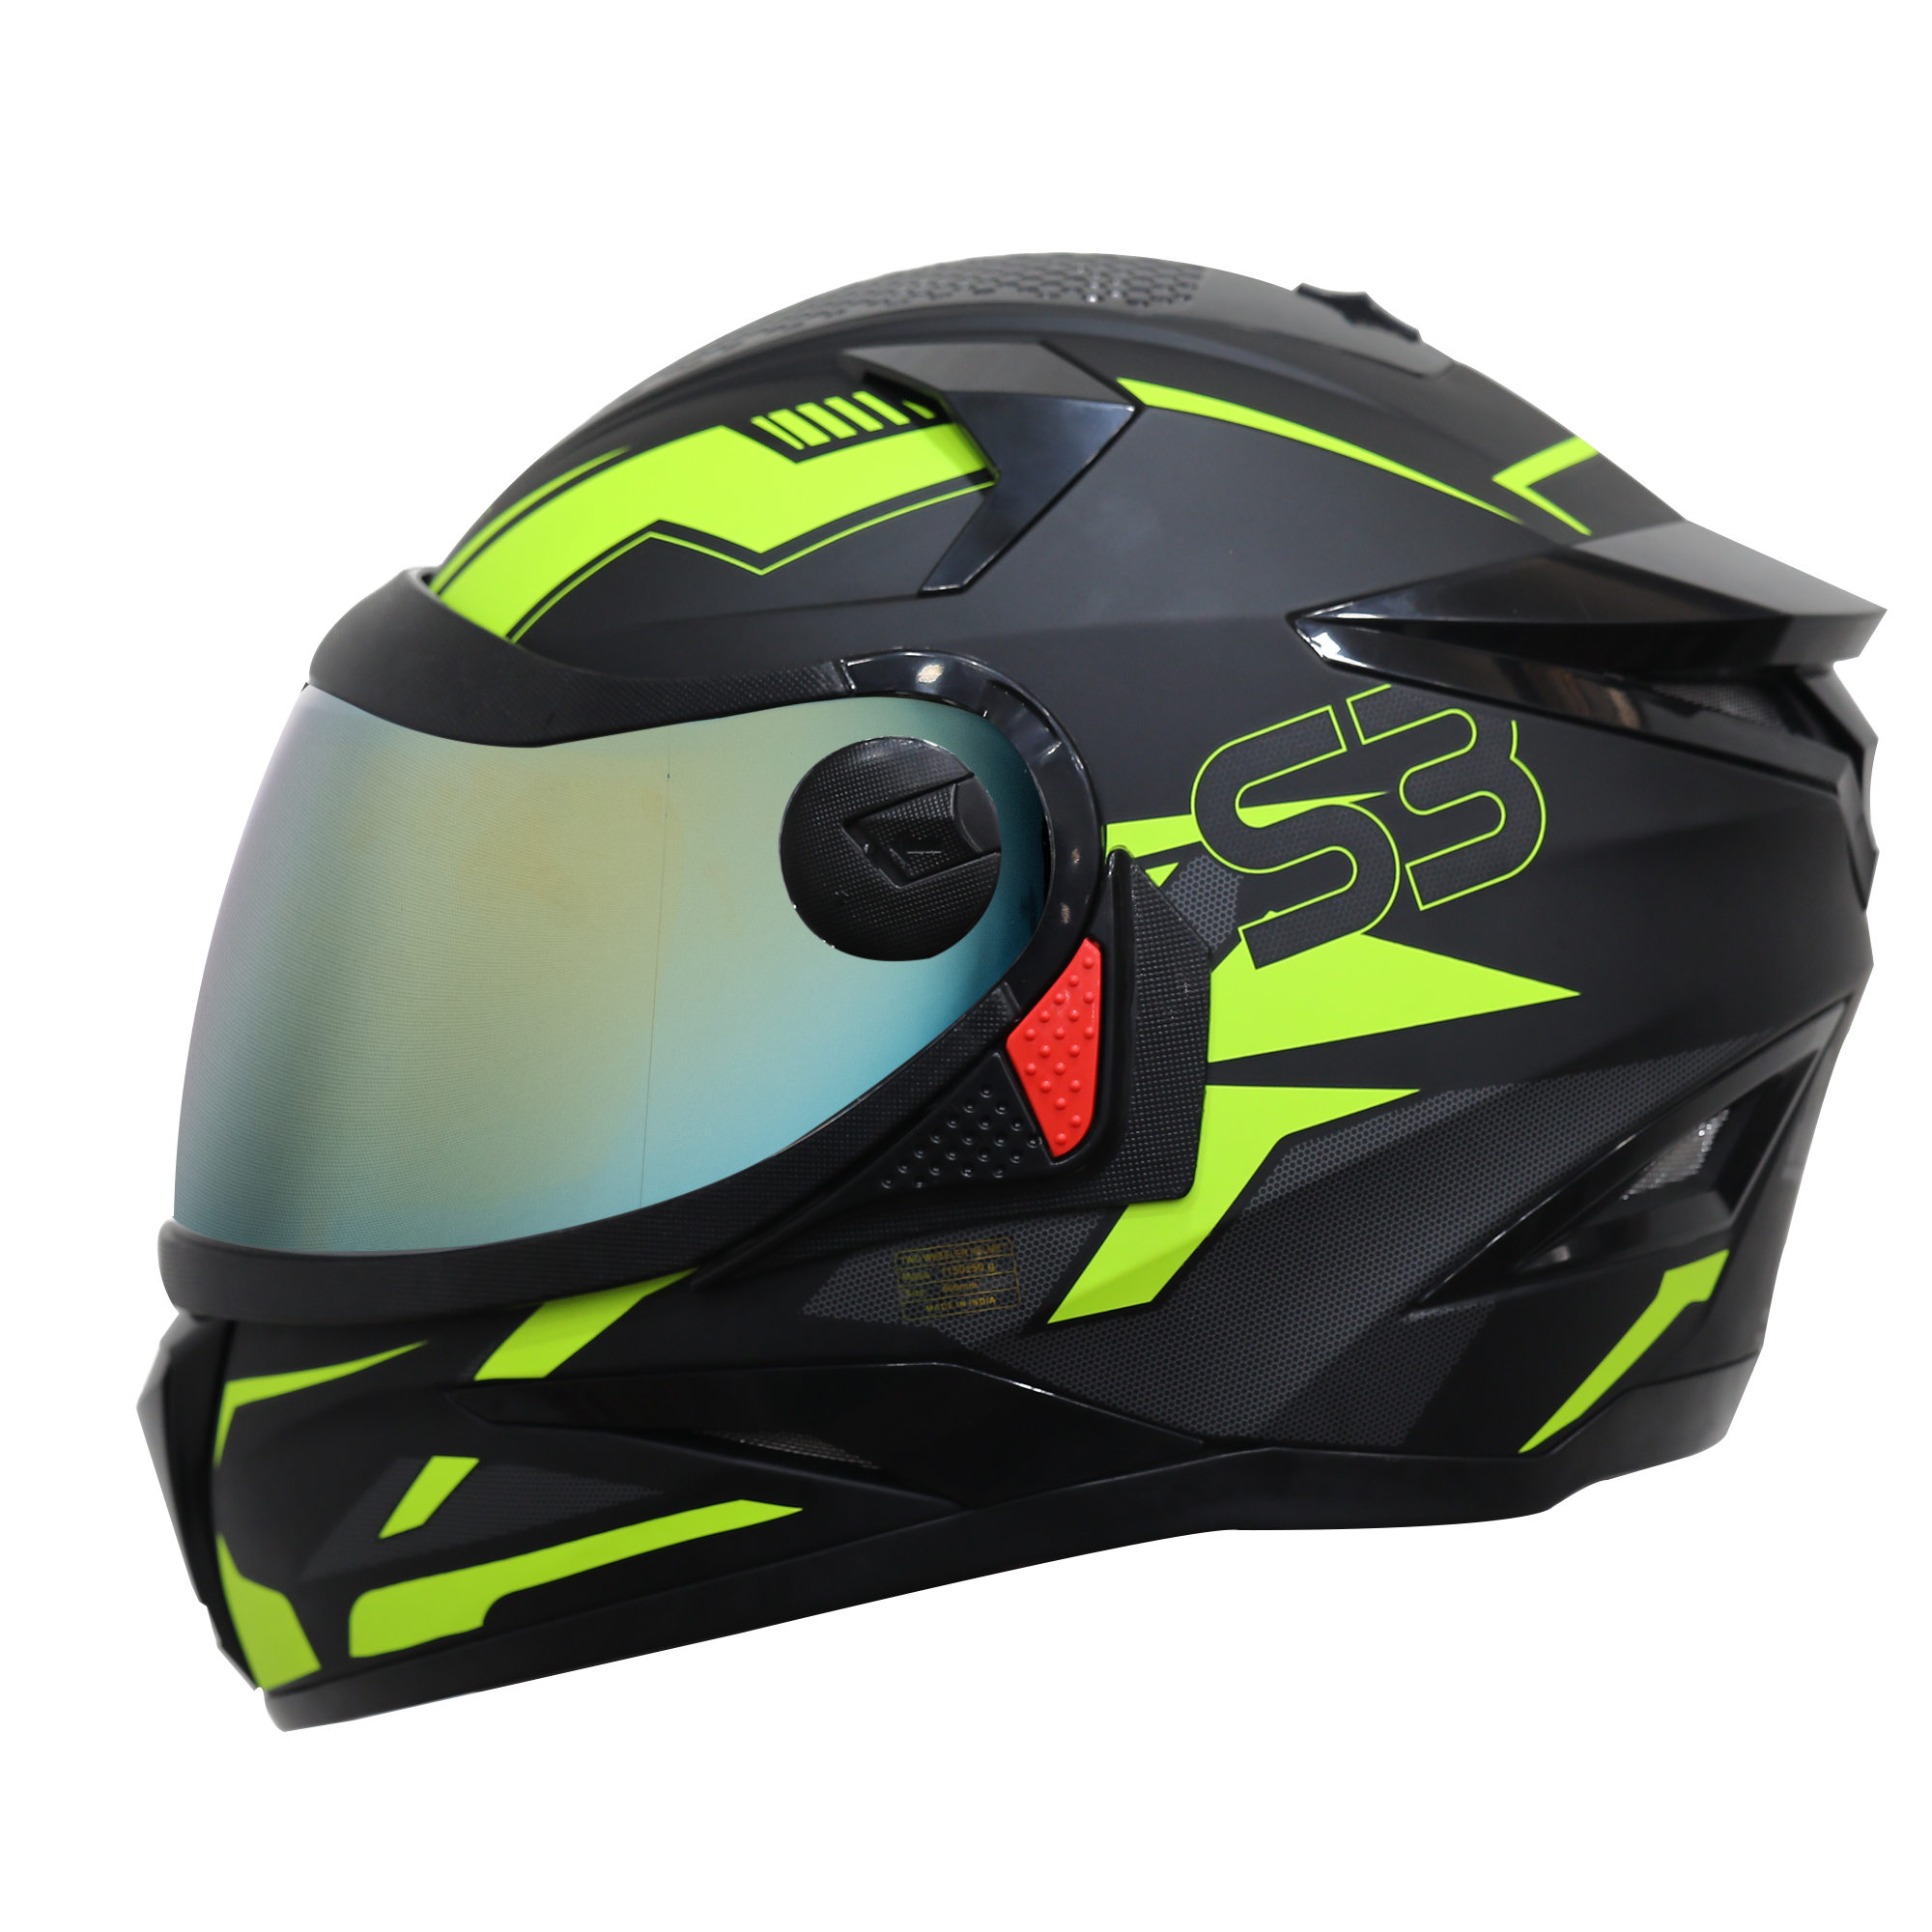 Steelbird SBH-17 Terminator ISI Certified Full Face Graphic Helmet (Matt Black Fluo Neon With Chrome Gold Visor)